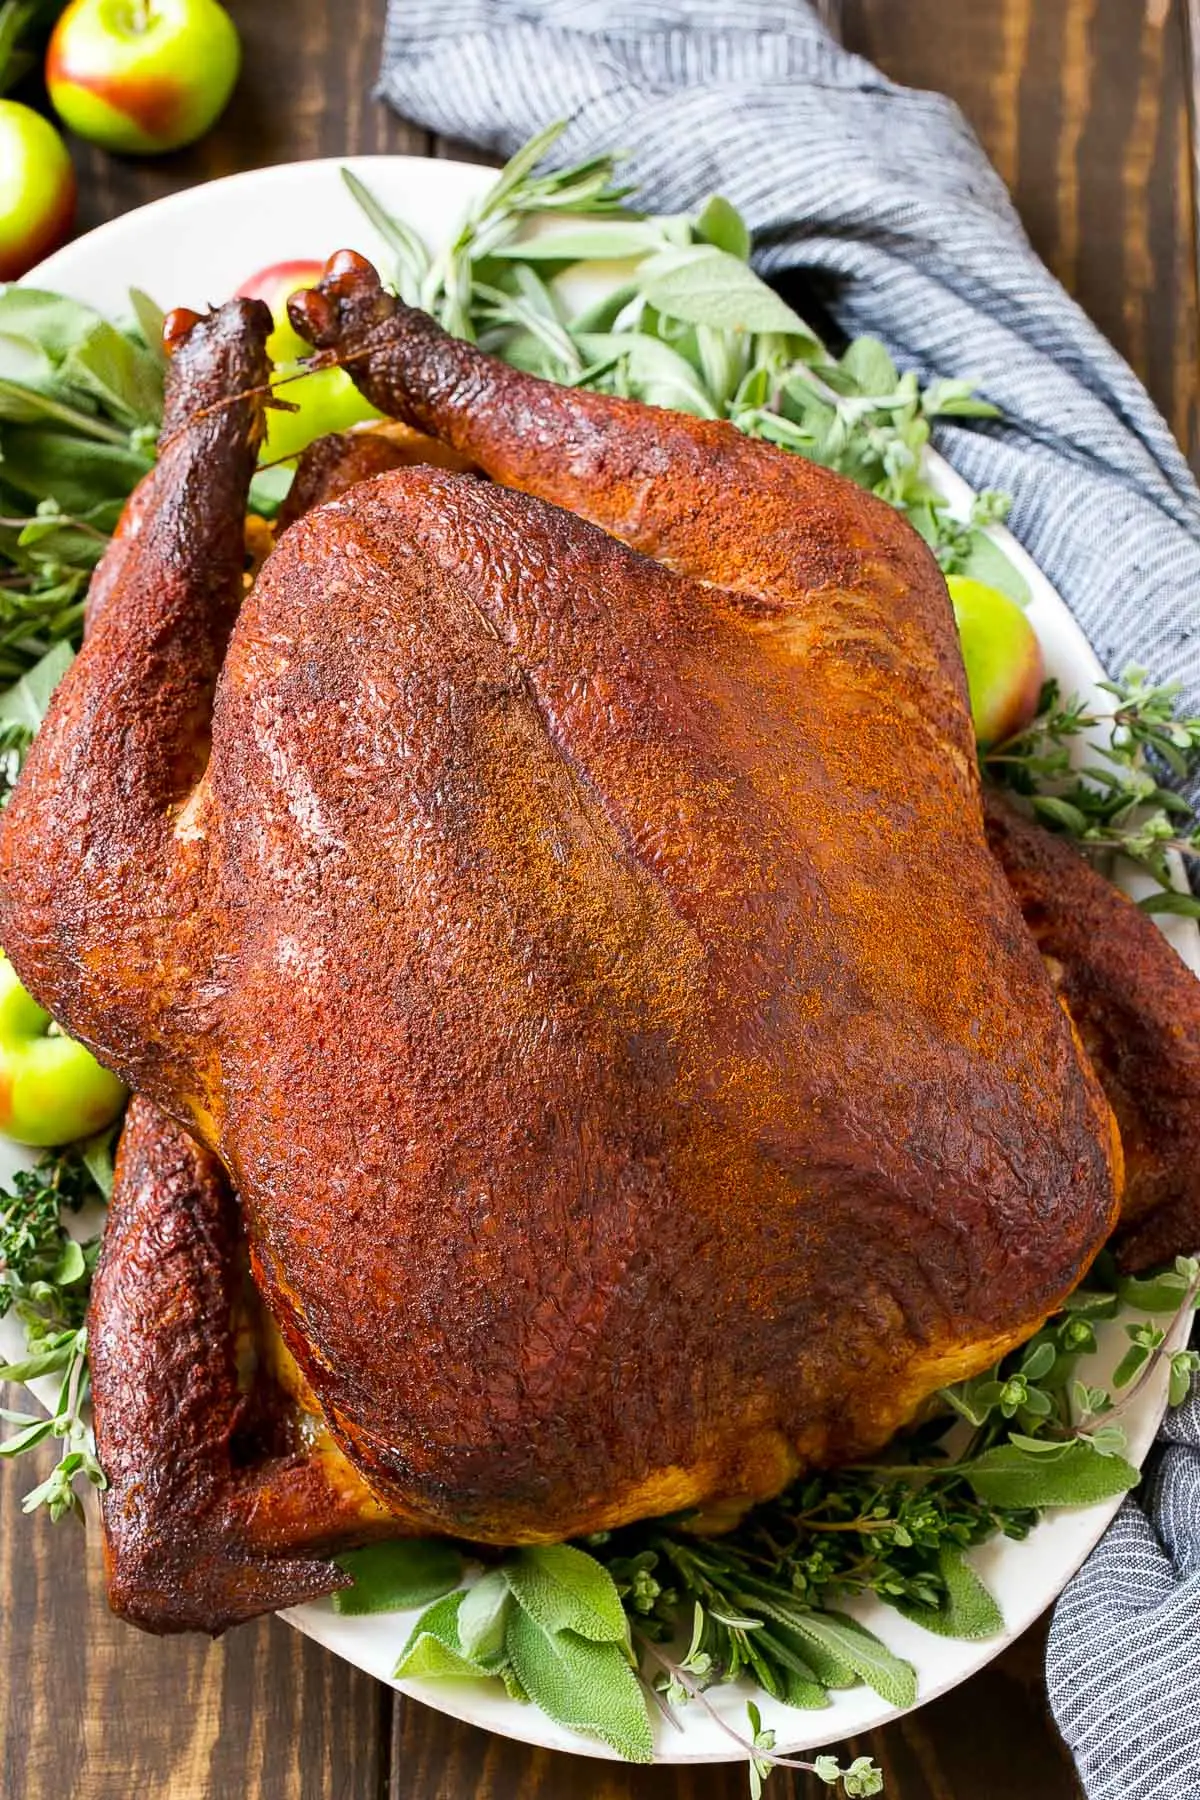 cook smoked turkey - Should I baste a smoked turkey